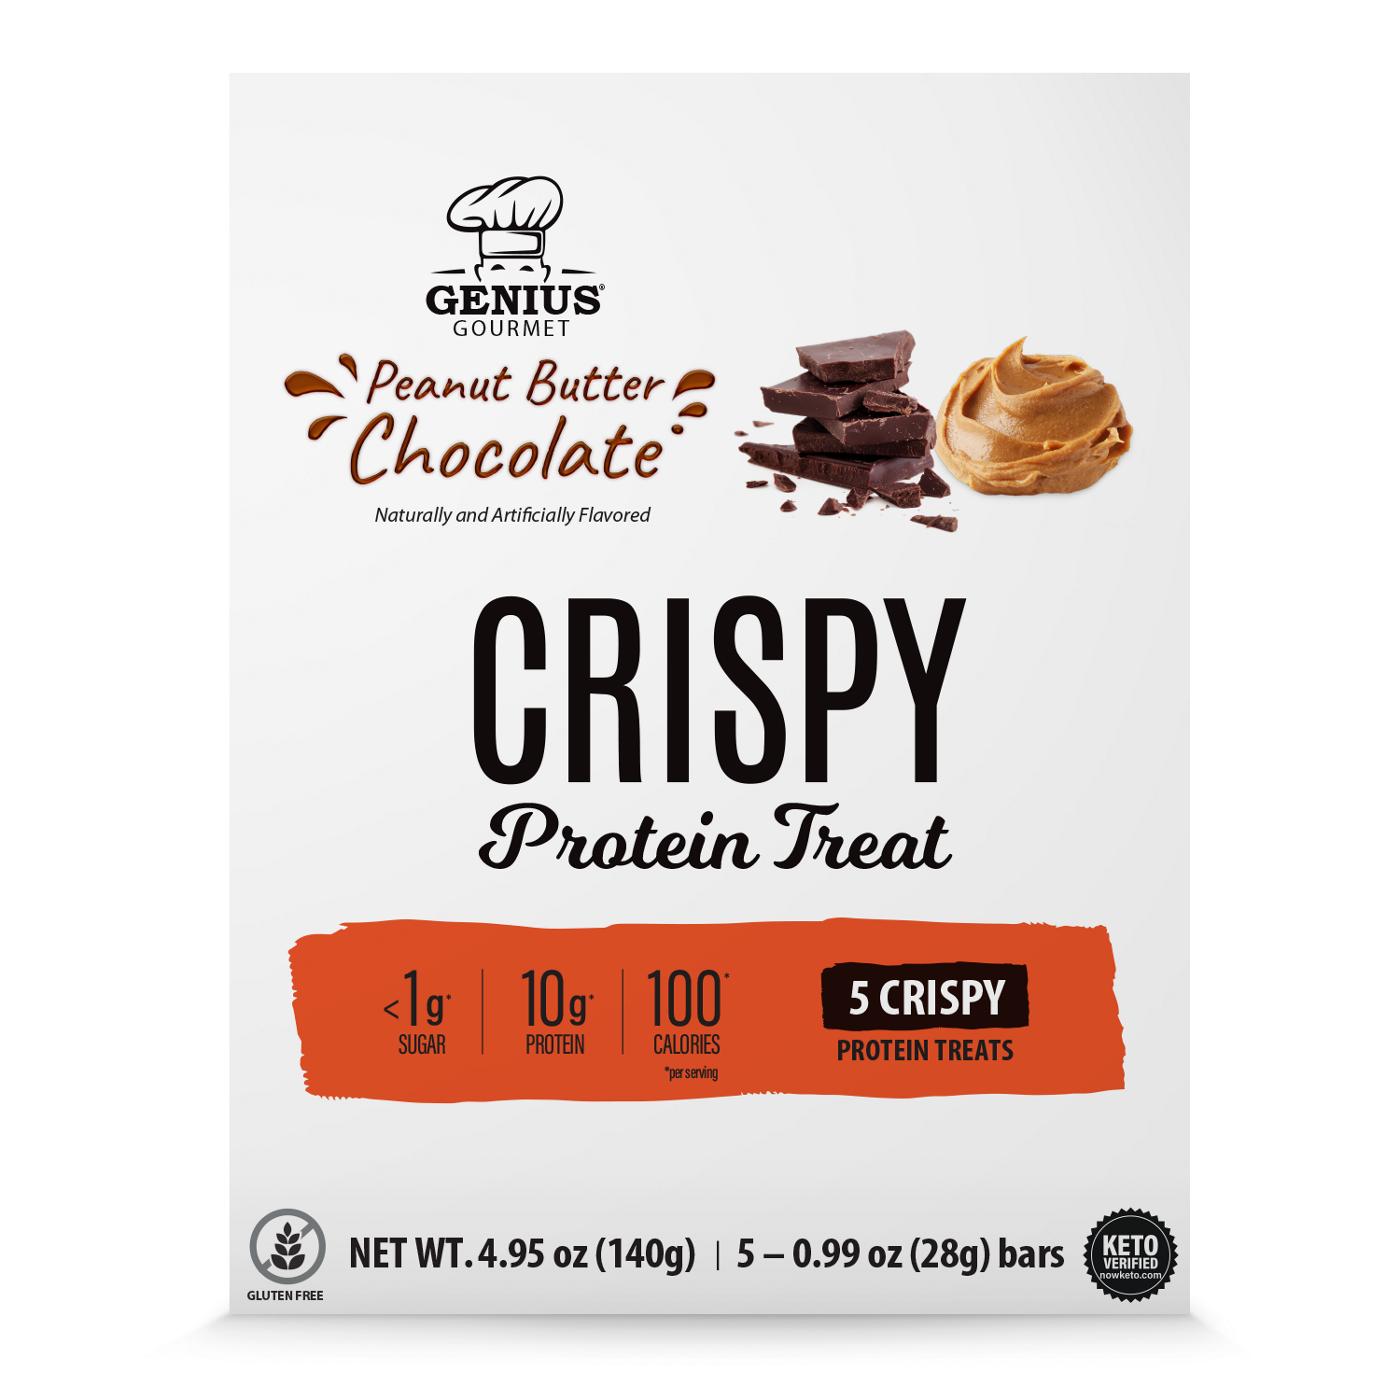 Genius Gourmet Crispy Protein Treat - Peanut Butter Chocolate; image 1 of 2